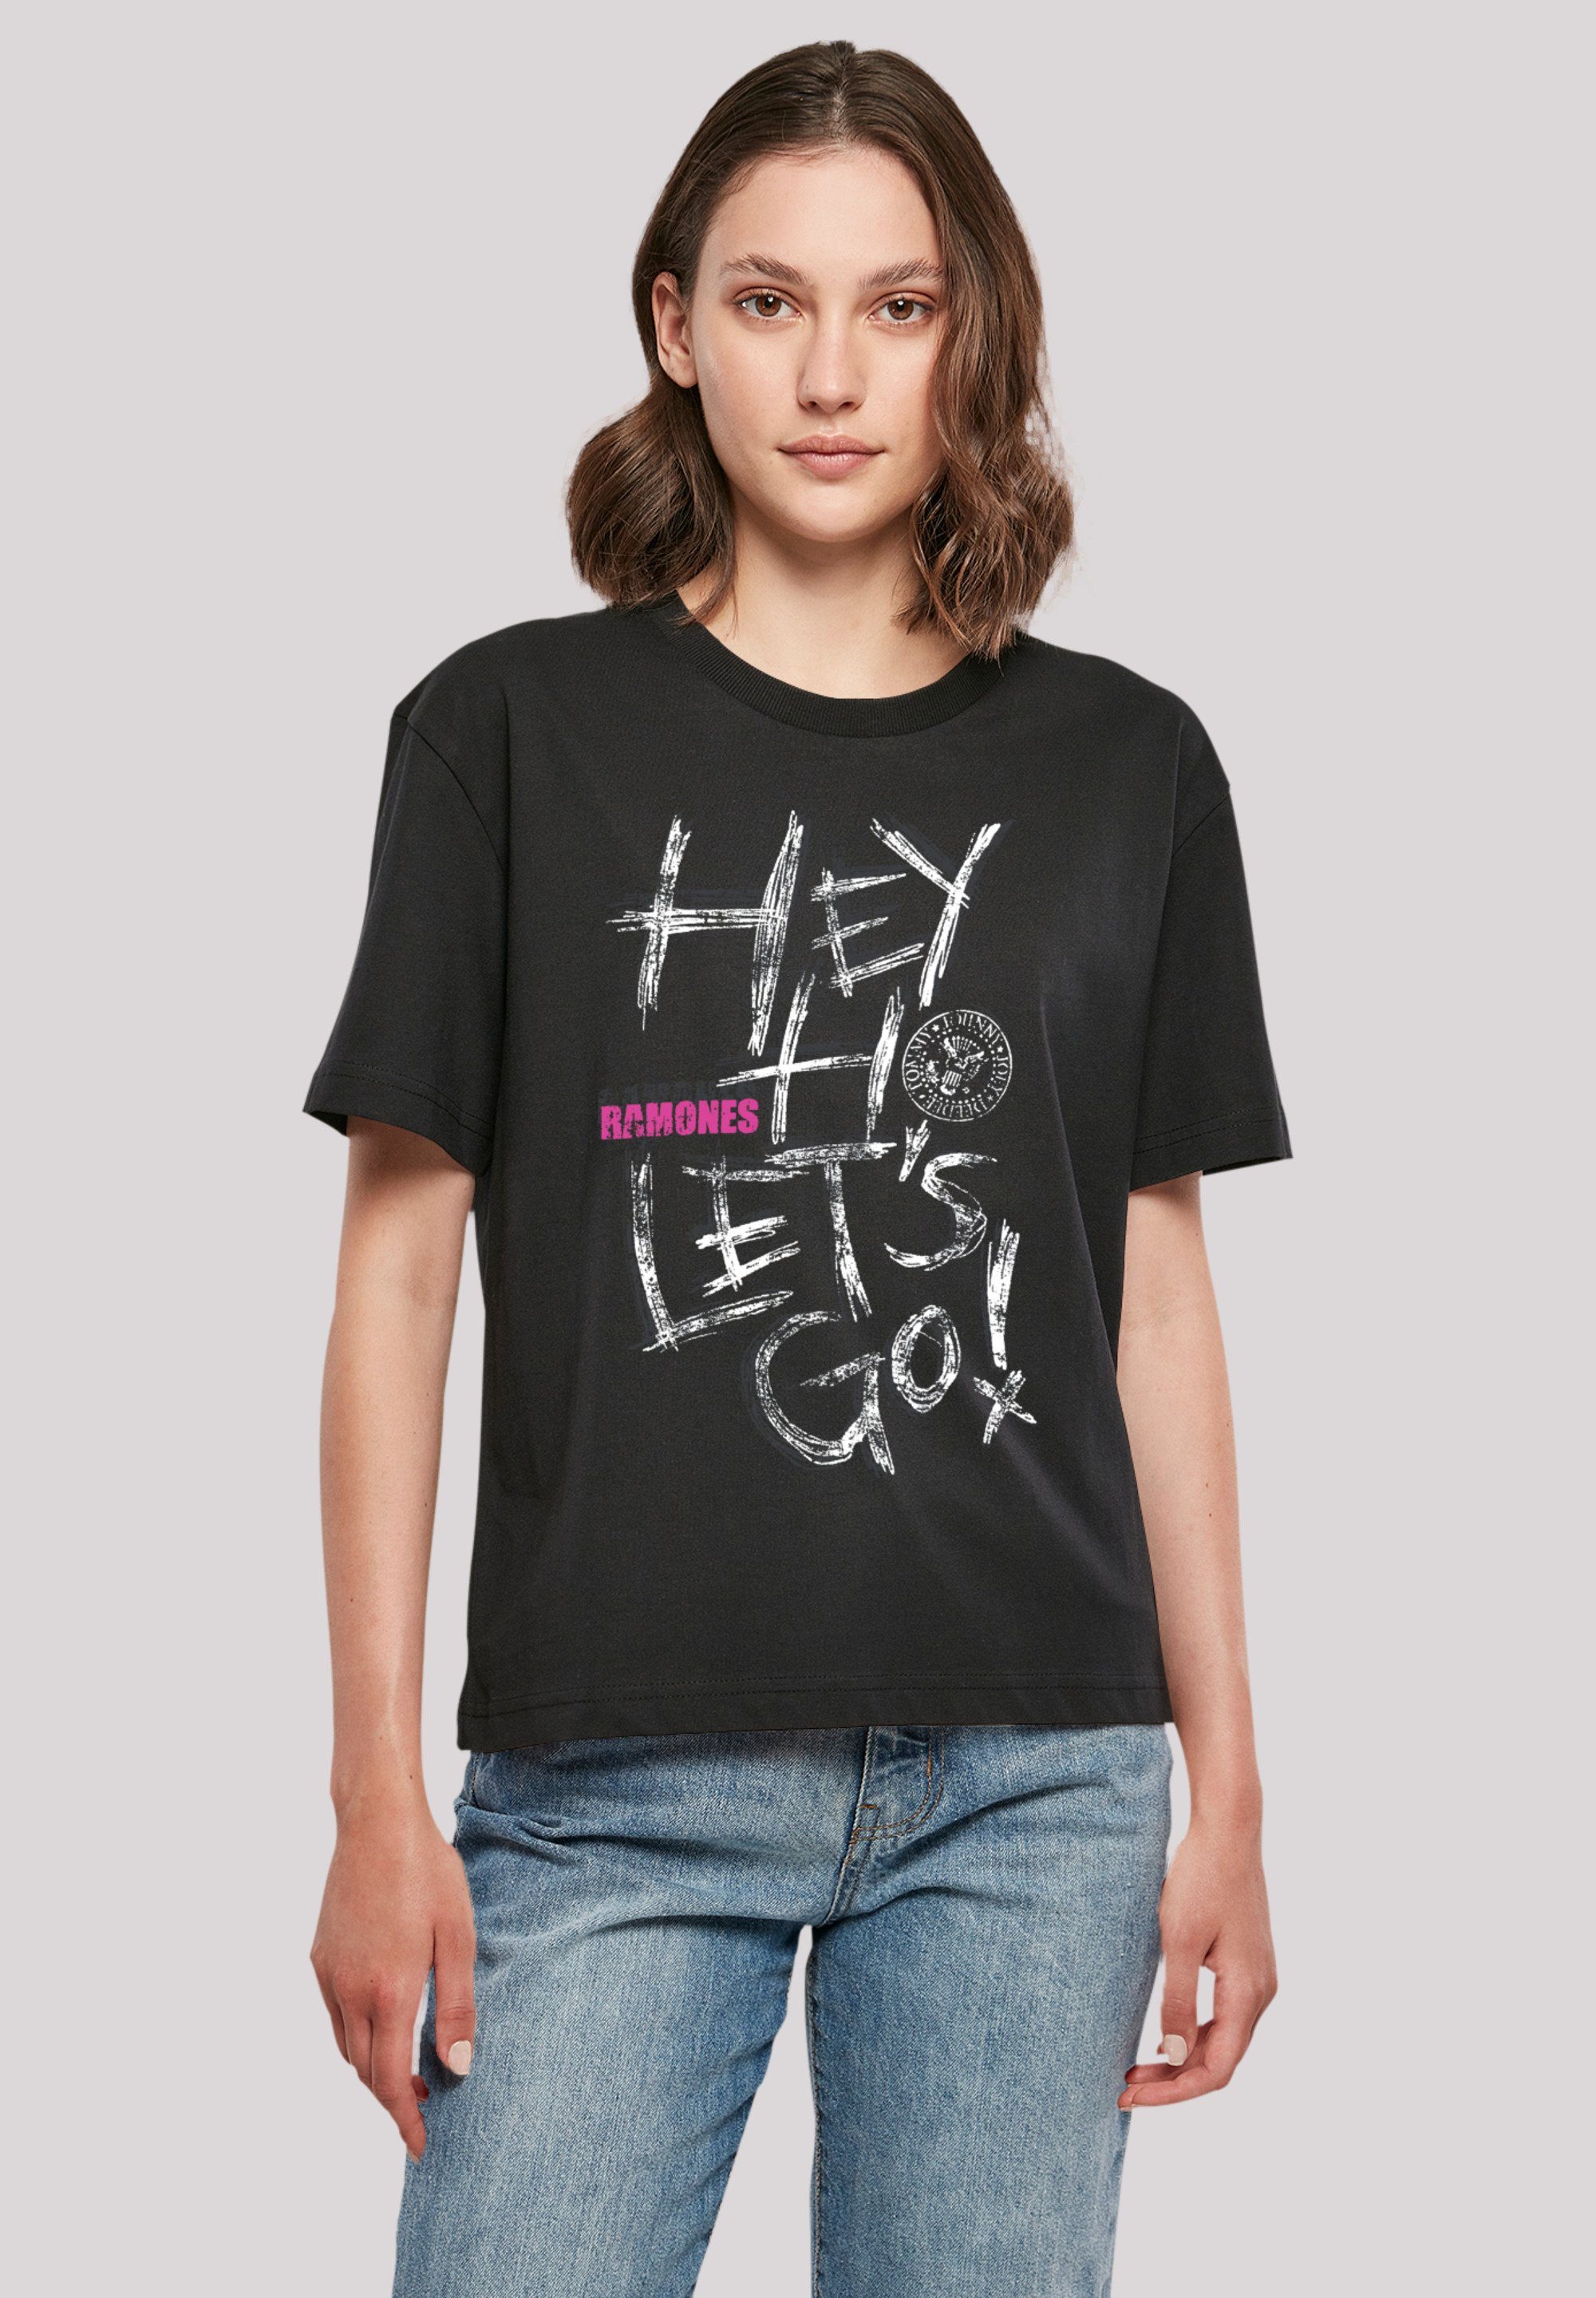 F4NT4STIC T-Shirt Ramones Rock Musik Band Hey Ho Let's Go Premium Qualität, Band, Rock-Musik